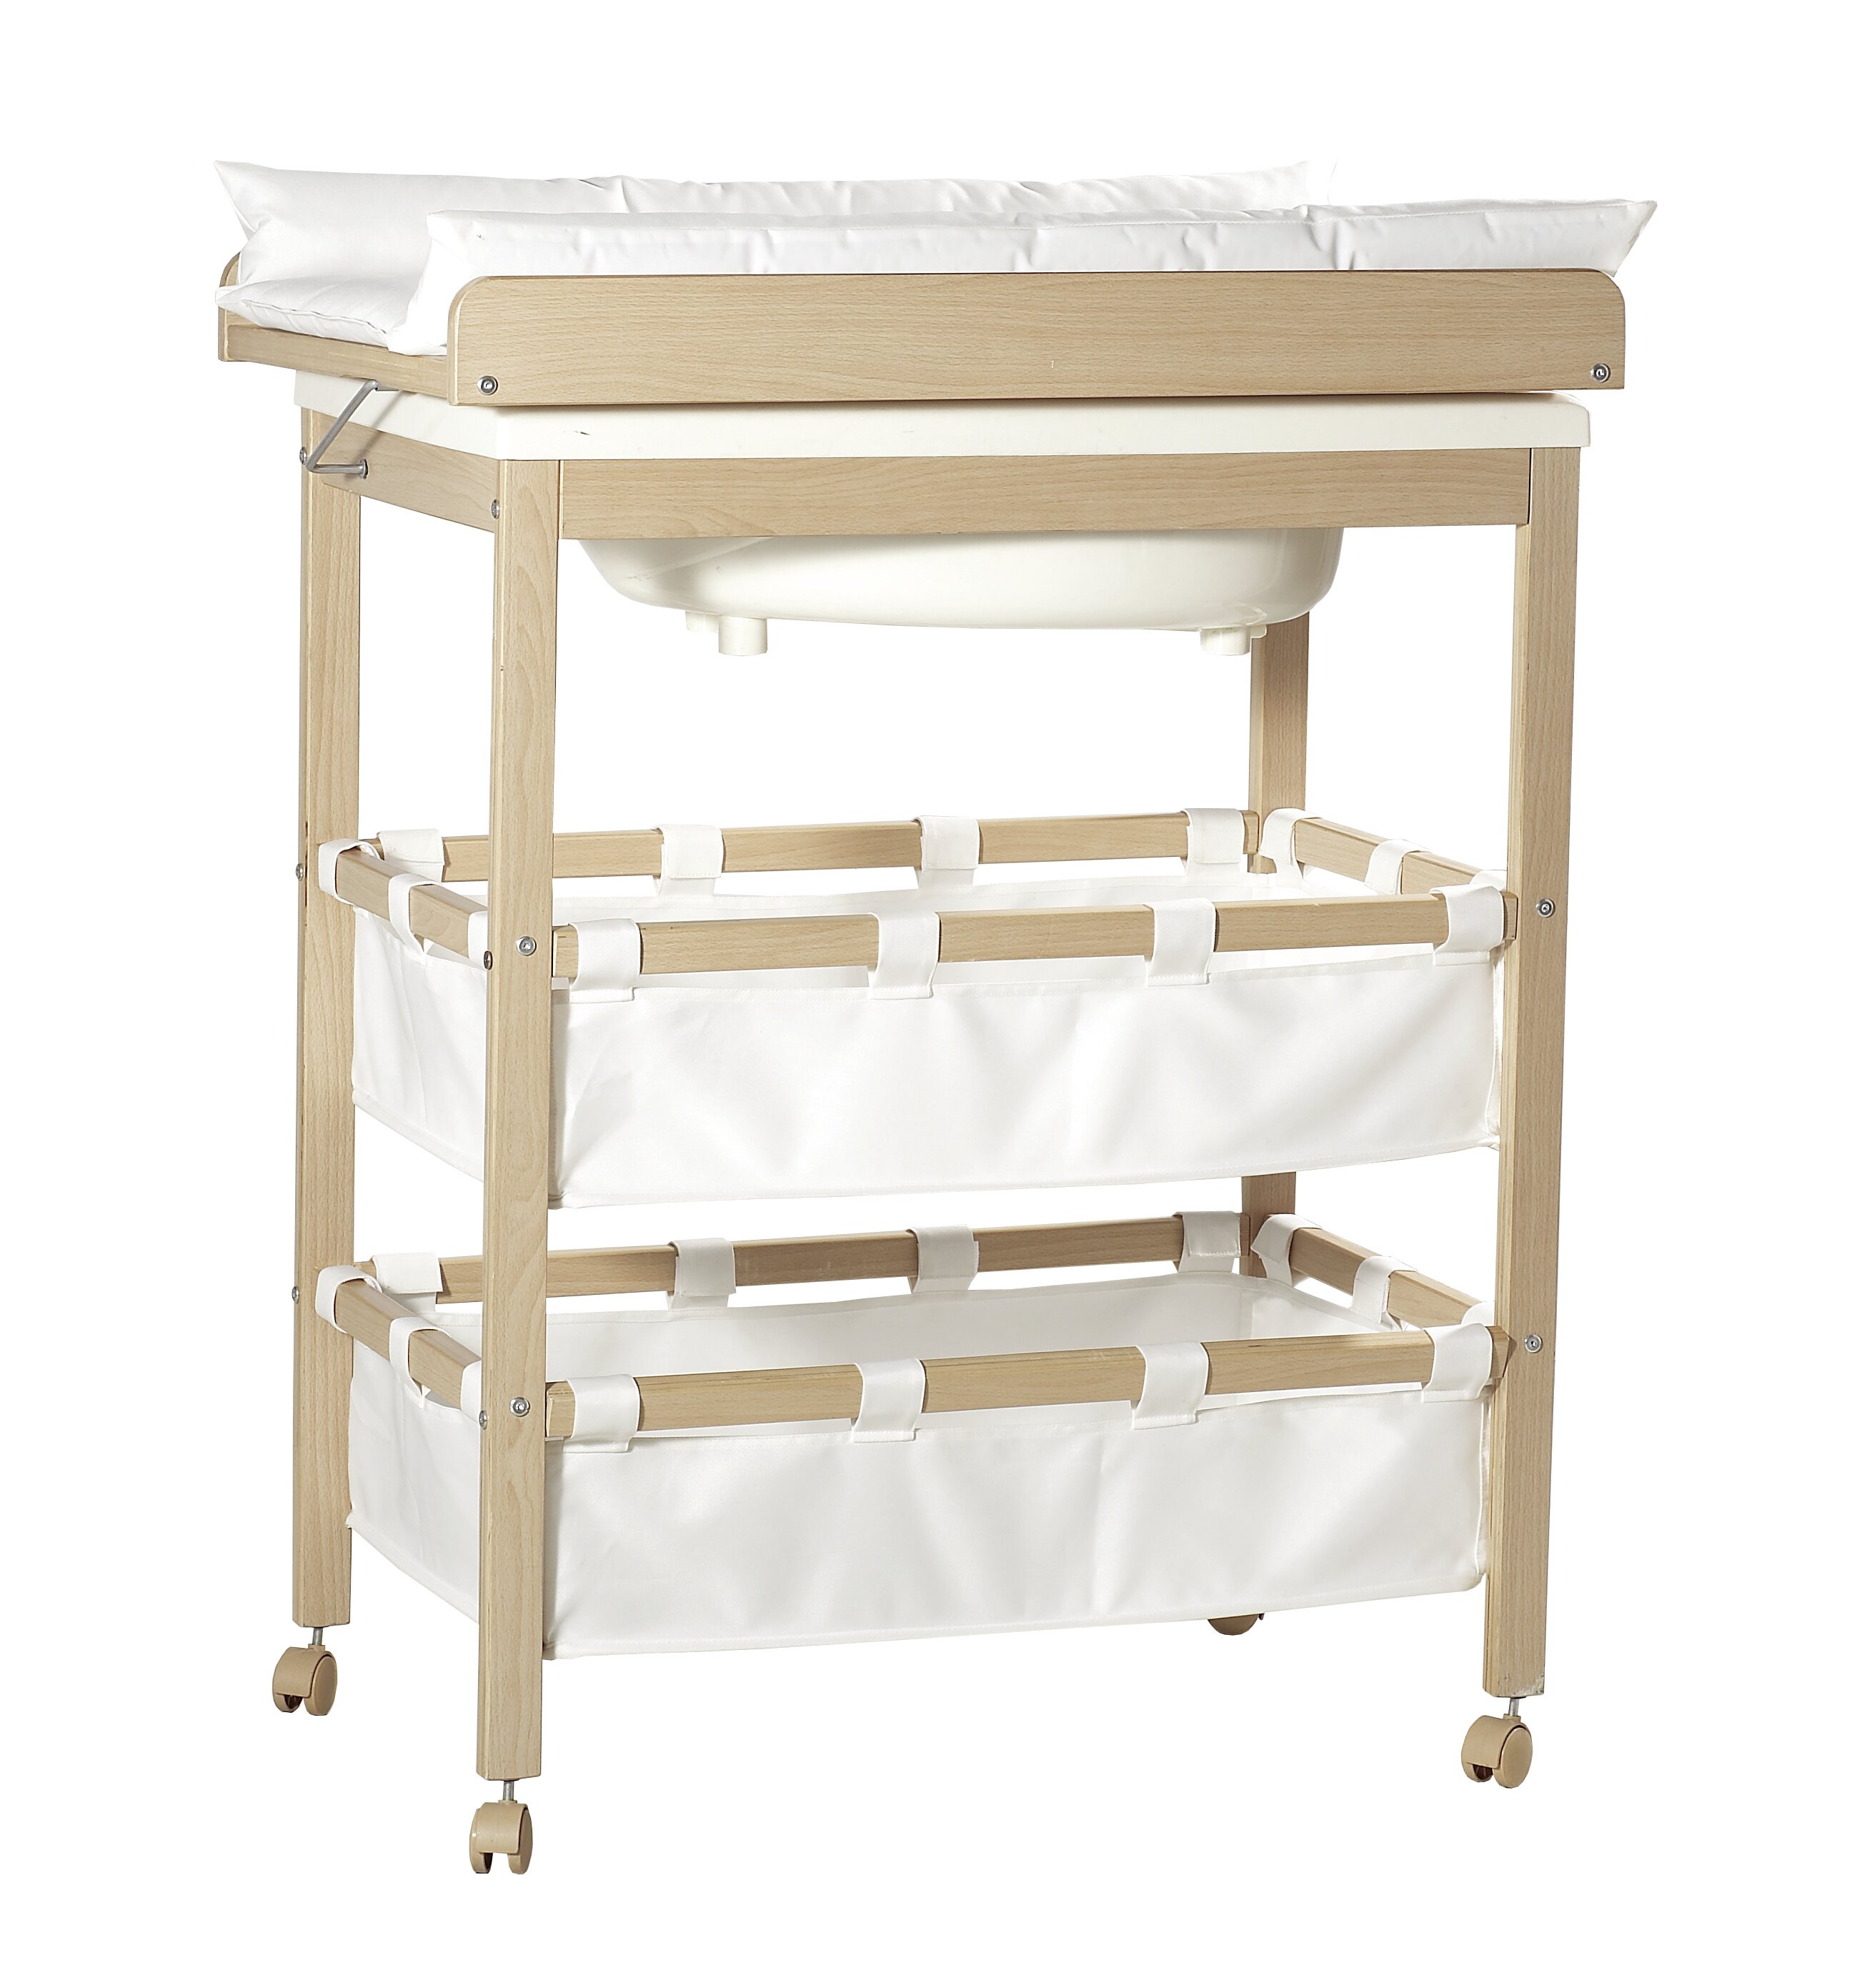 ib style® Changing table Bathtub on wheels Baby Toddler Dresser Unit Storage 